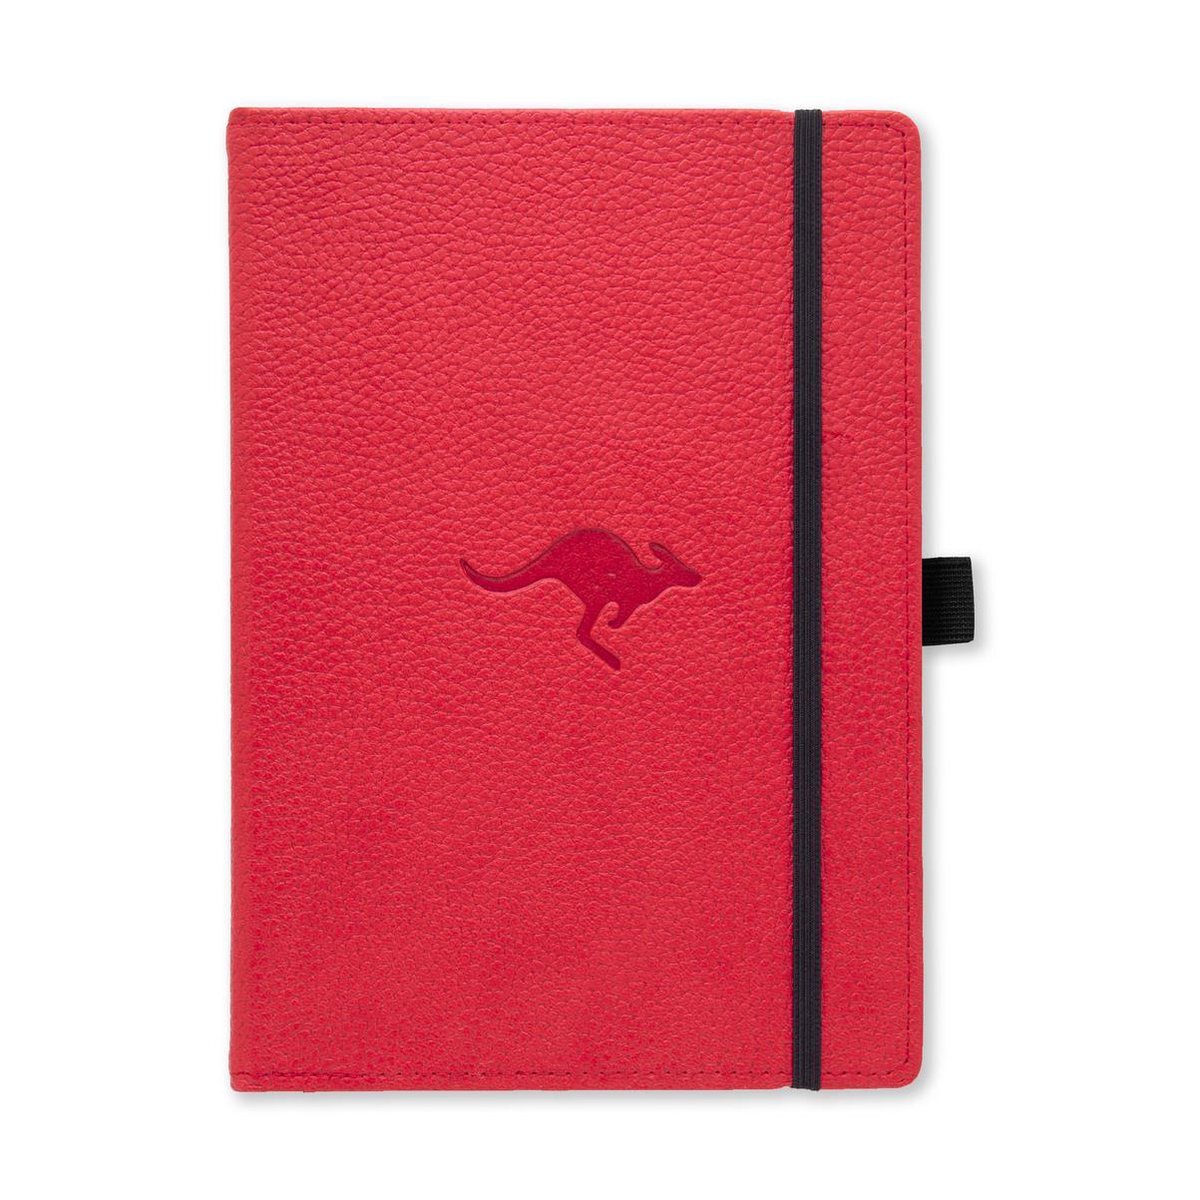 Dingbats Notebooks Dingbats A5+ Wildlife Red Kangaroo Notebook - Dotted